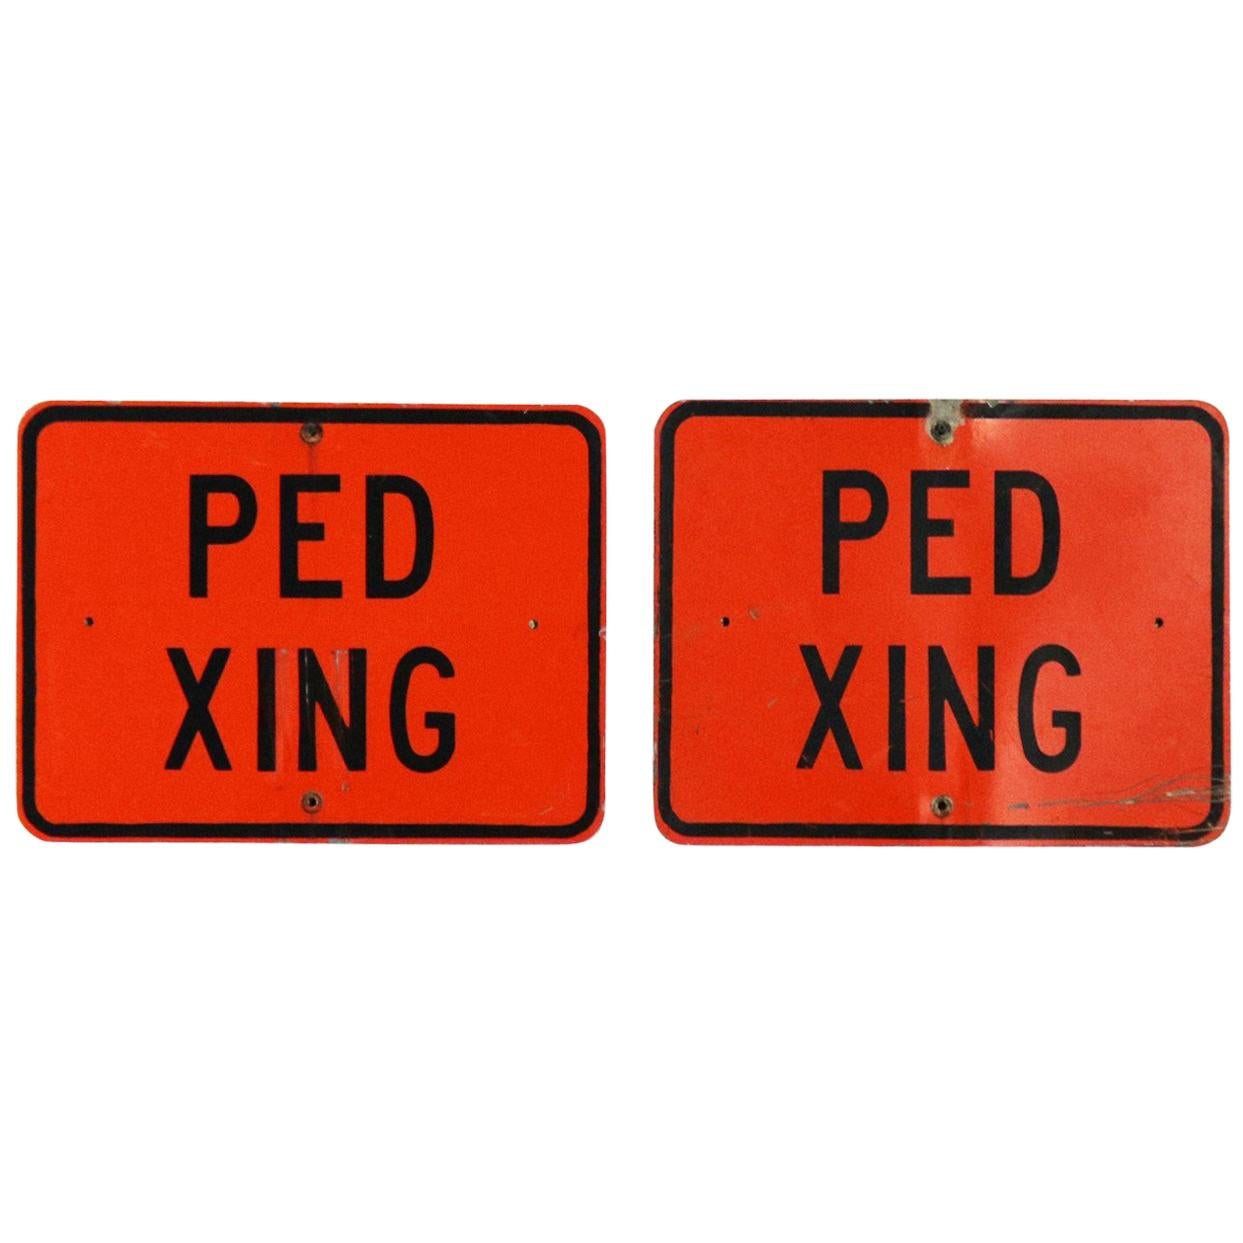 Vintage Ped Xing Florescent Orange Metal Traffic Signs